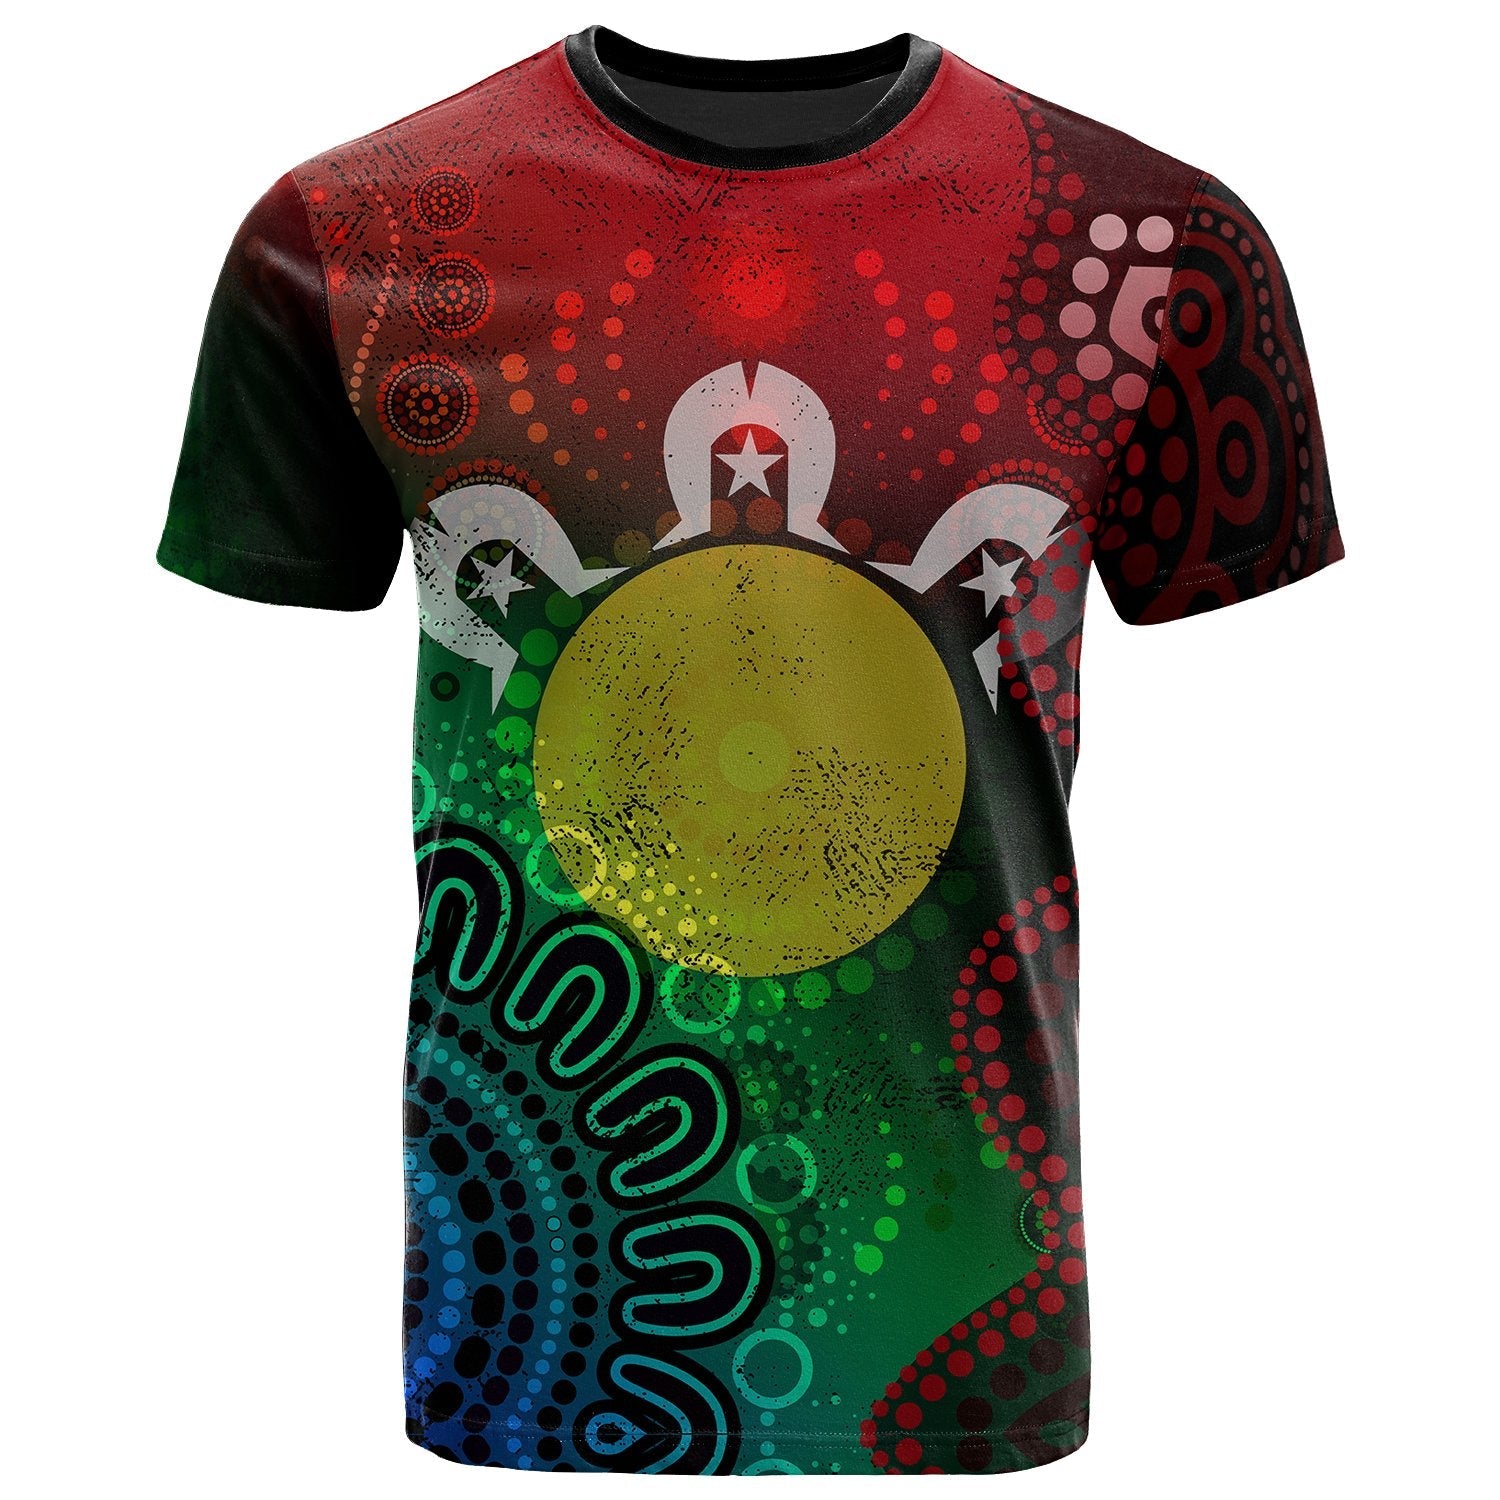 naidoc-week-t-shirt-inspiration-of-indigenous-art